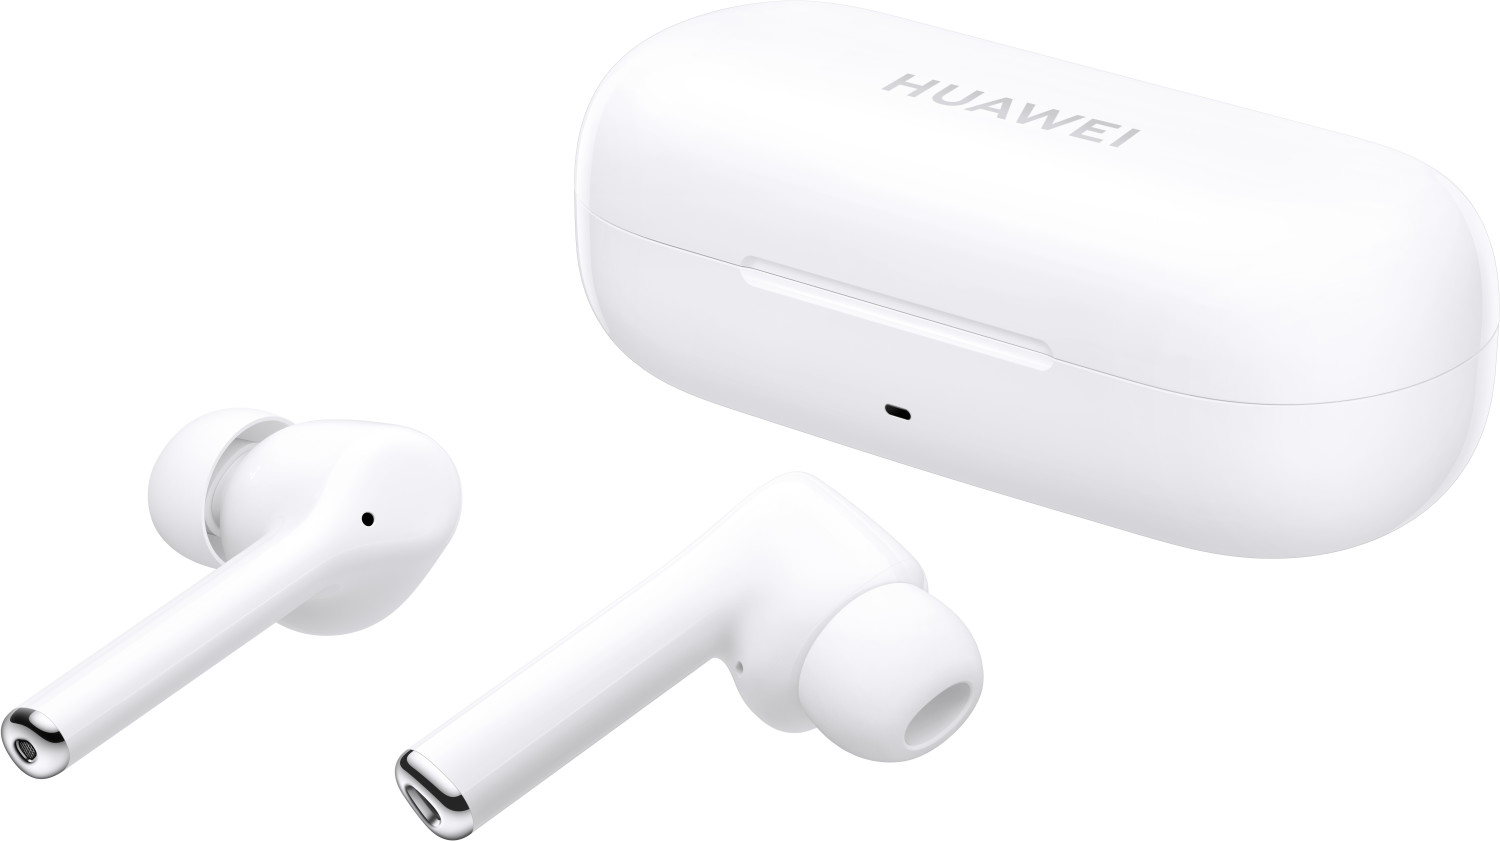 Huawei FreeBuds 3i White